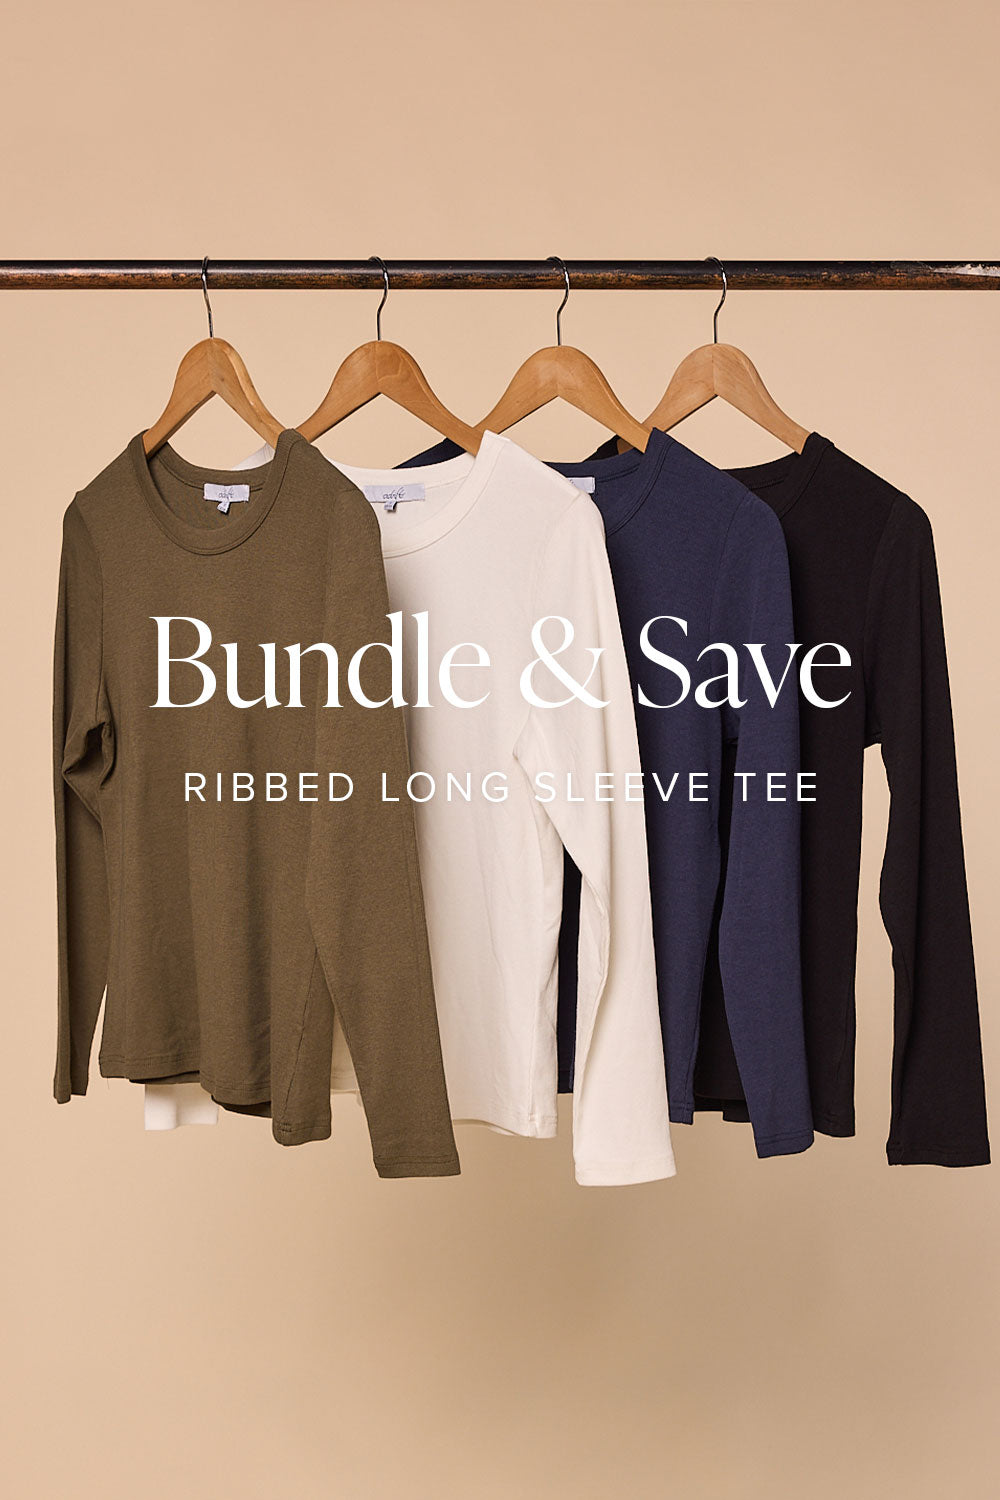 Bundle & Save, Buy More & Save More with Adrift Bundles